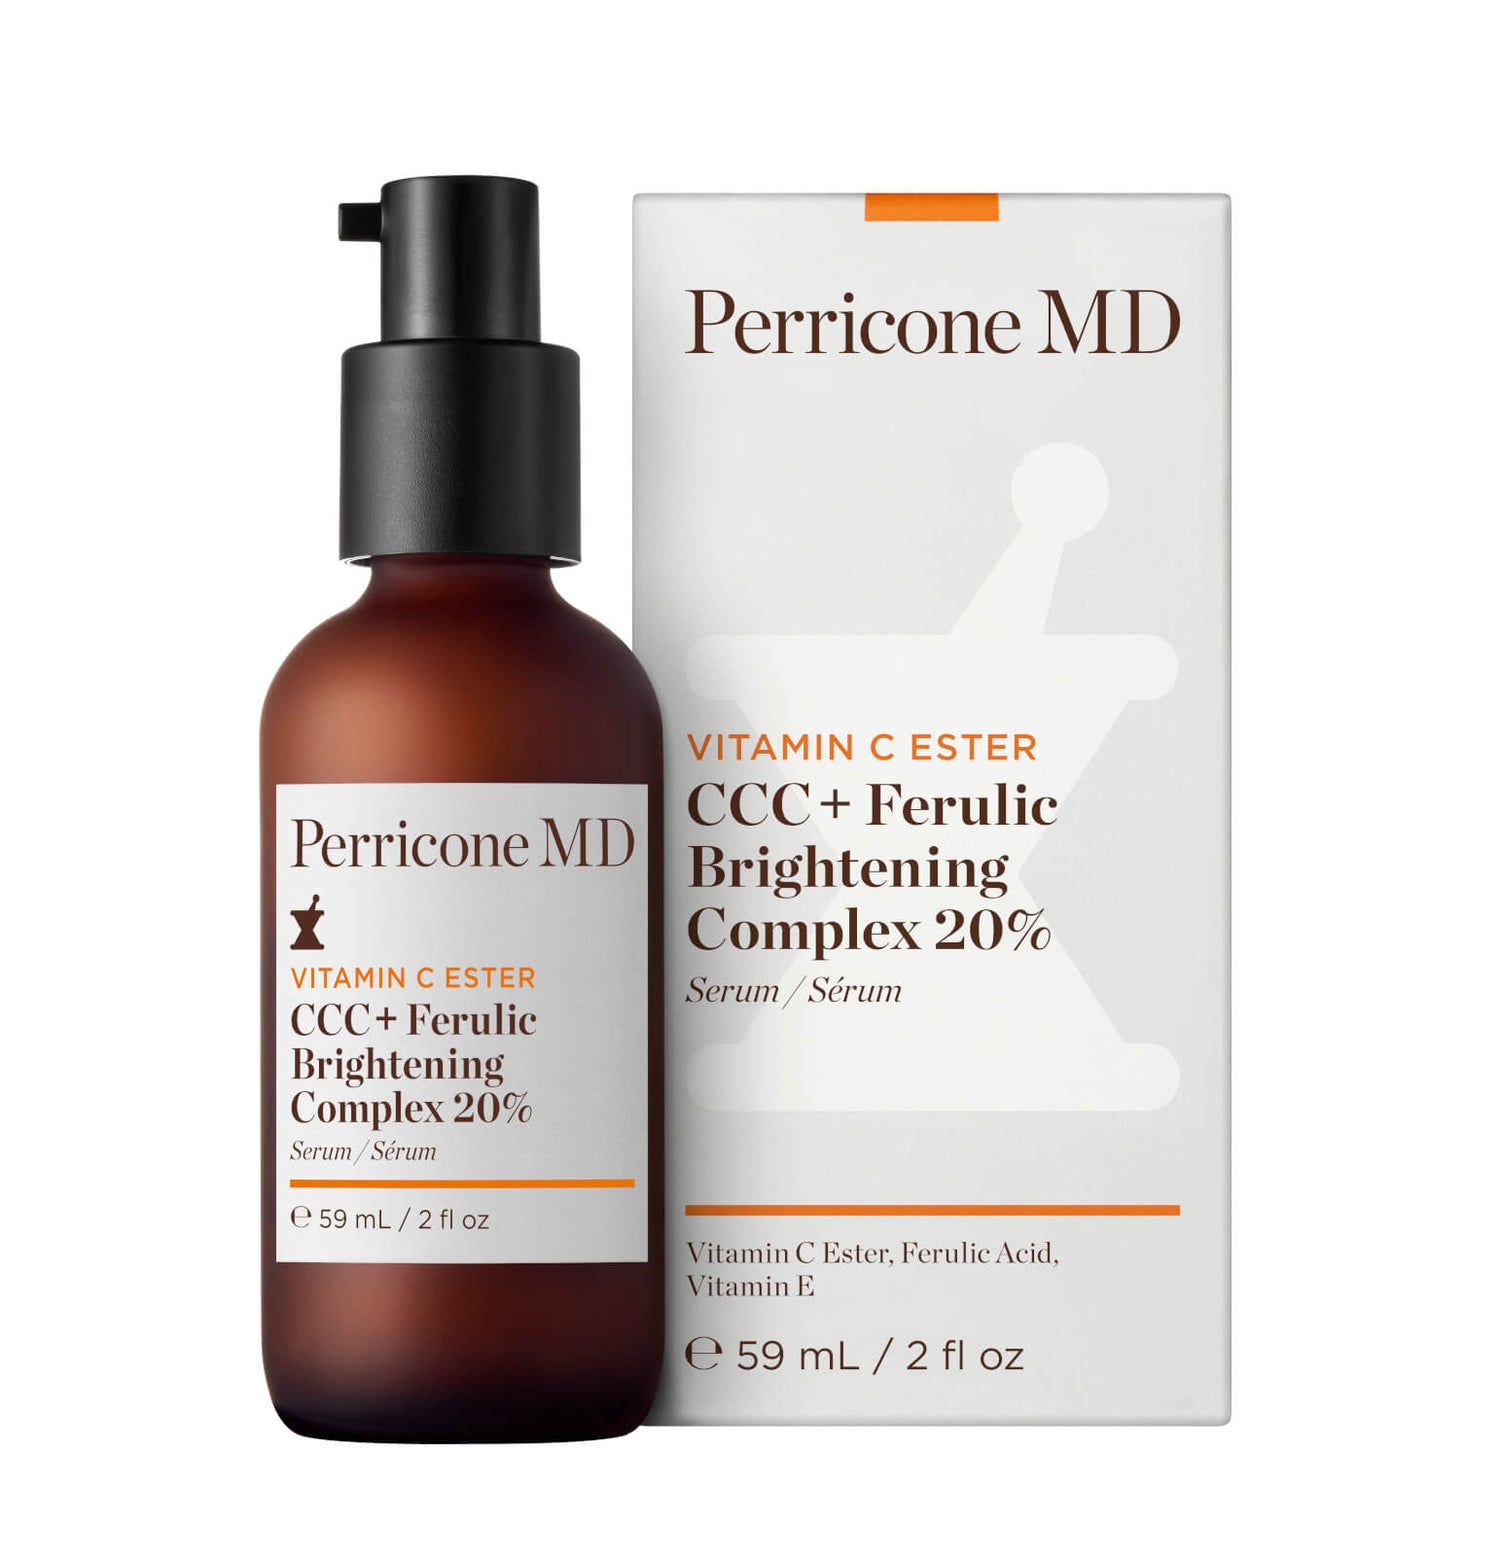 Perricone MD Vitamin C Ester CCC Ferulic Brightening Complex 20 (2 fl. oz.)